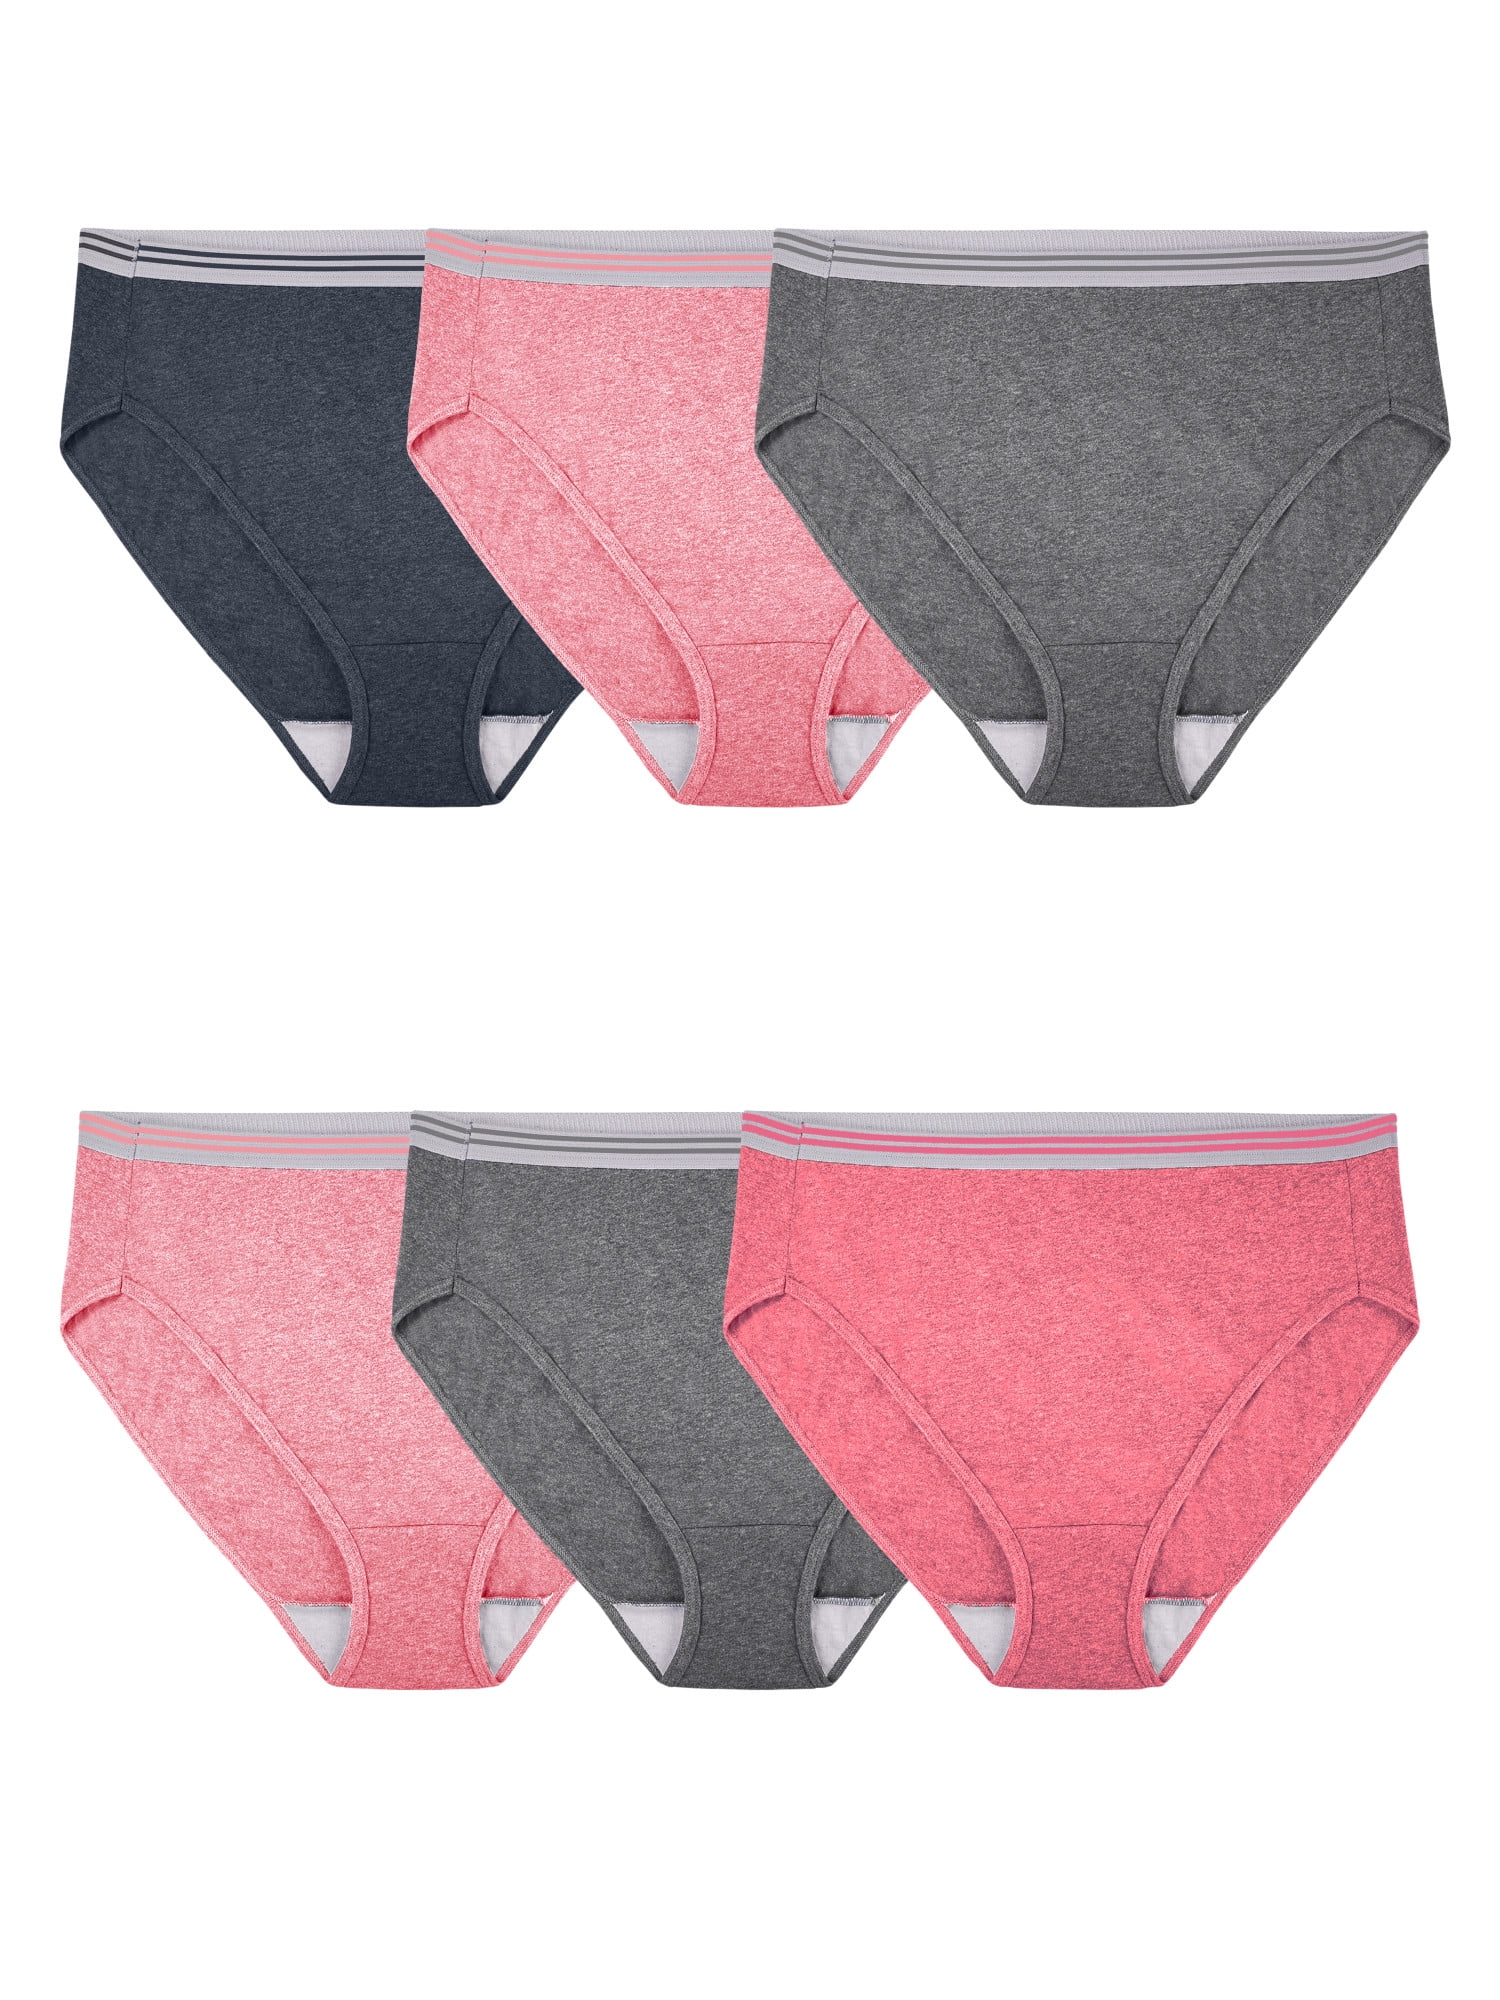 Hanes Women's 10pk Cool Comfort Cotton Stretch Bikini Underwear - Black/gray/white  : Target